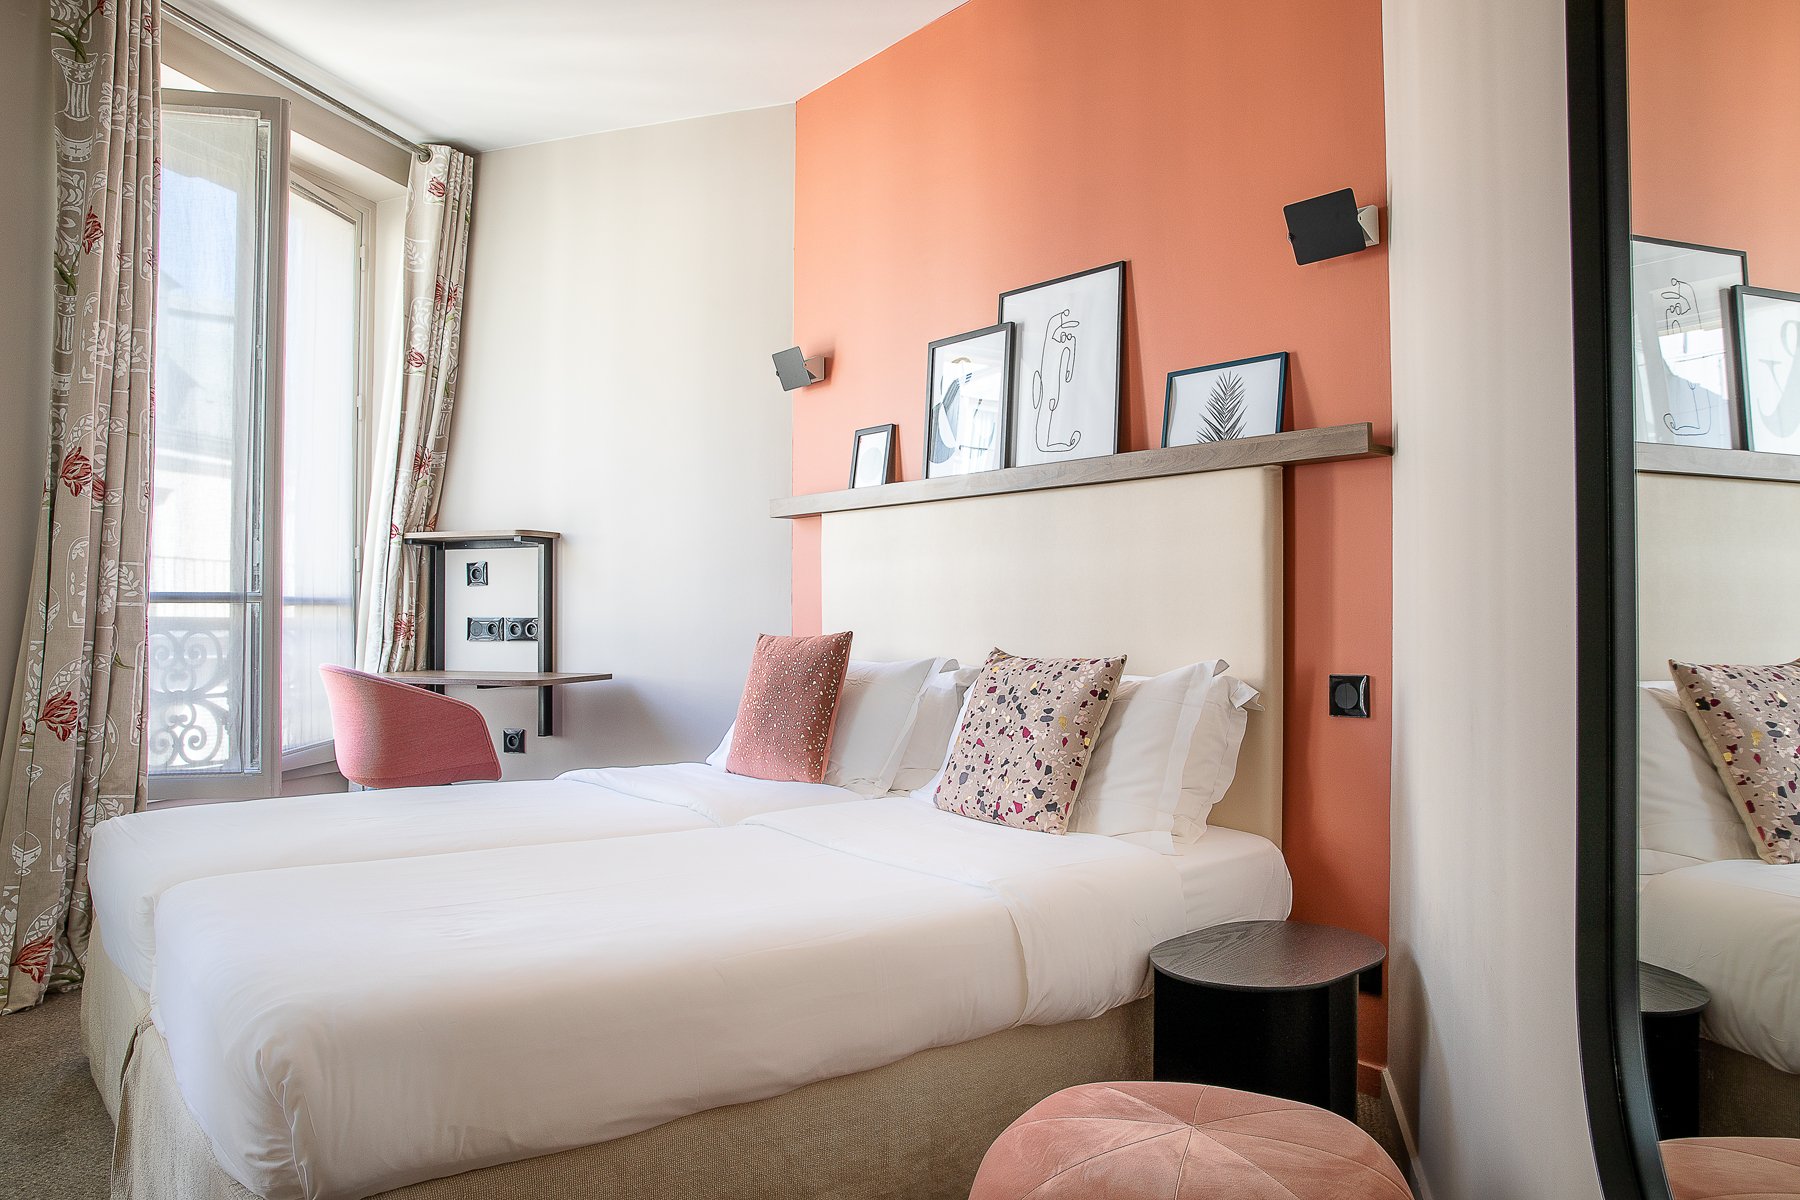 Hotel Petit Belloy Saint-Germain | Offers